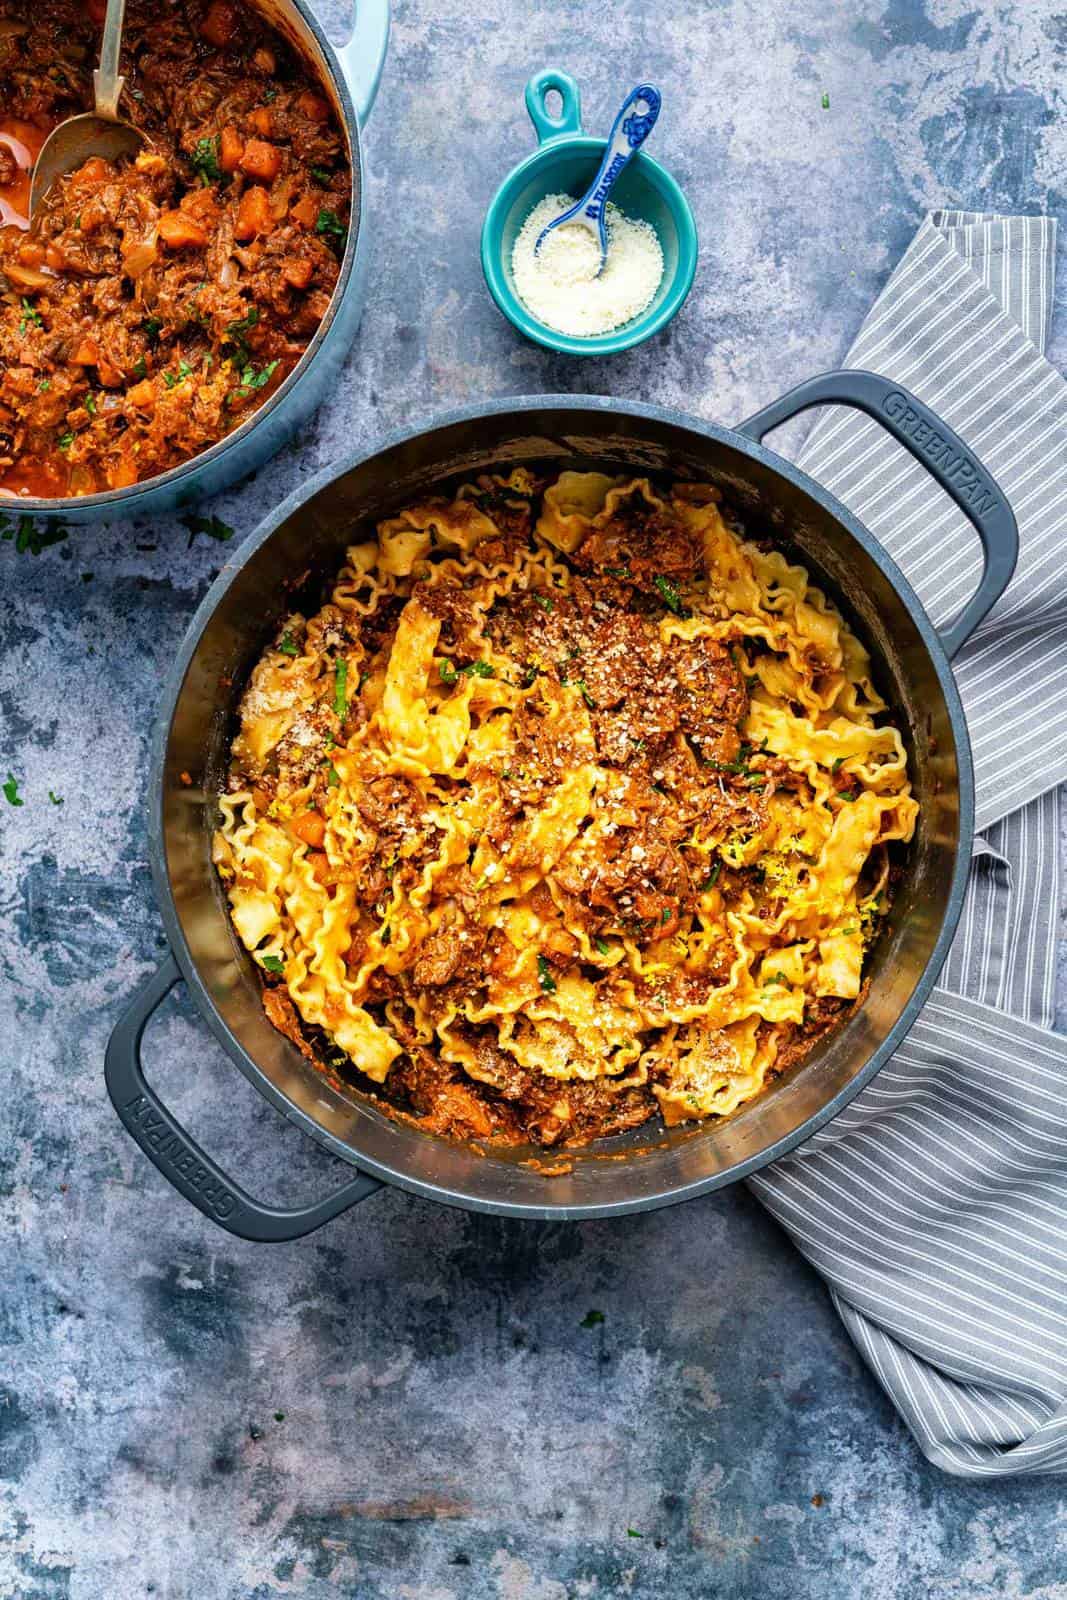 Pot of mafaldine pasta tossed with rich meaty ragu sauce